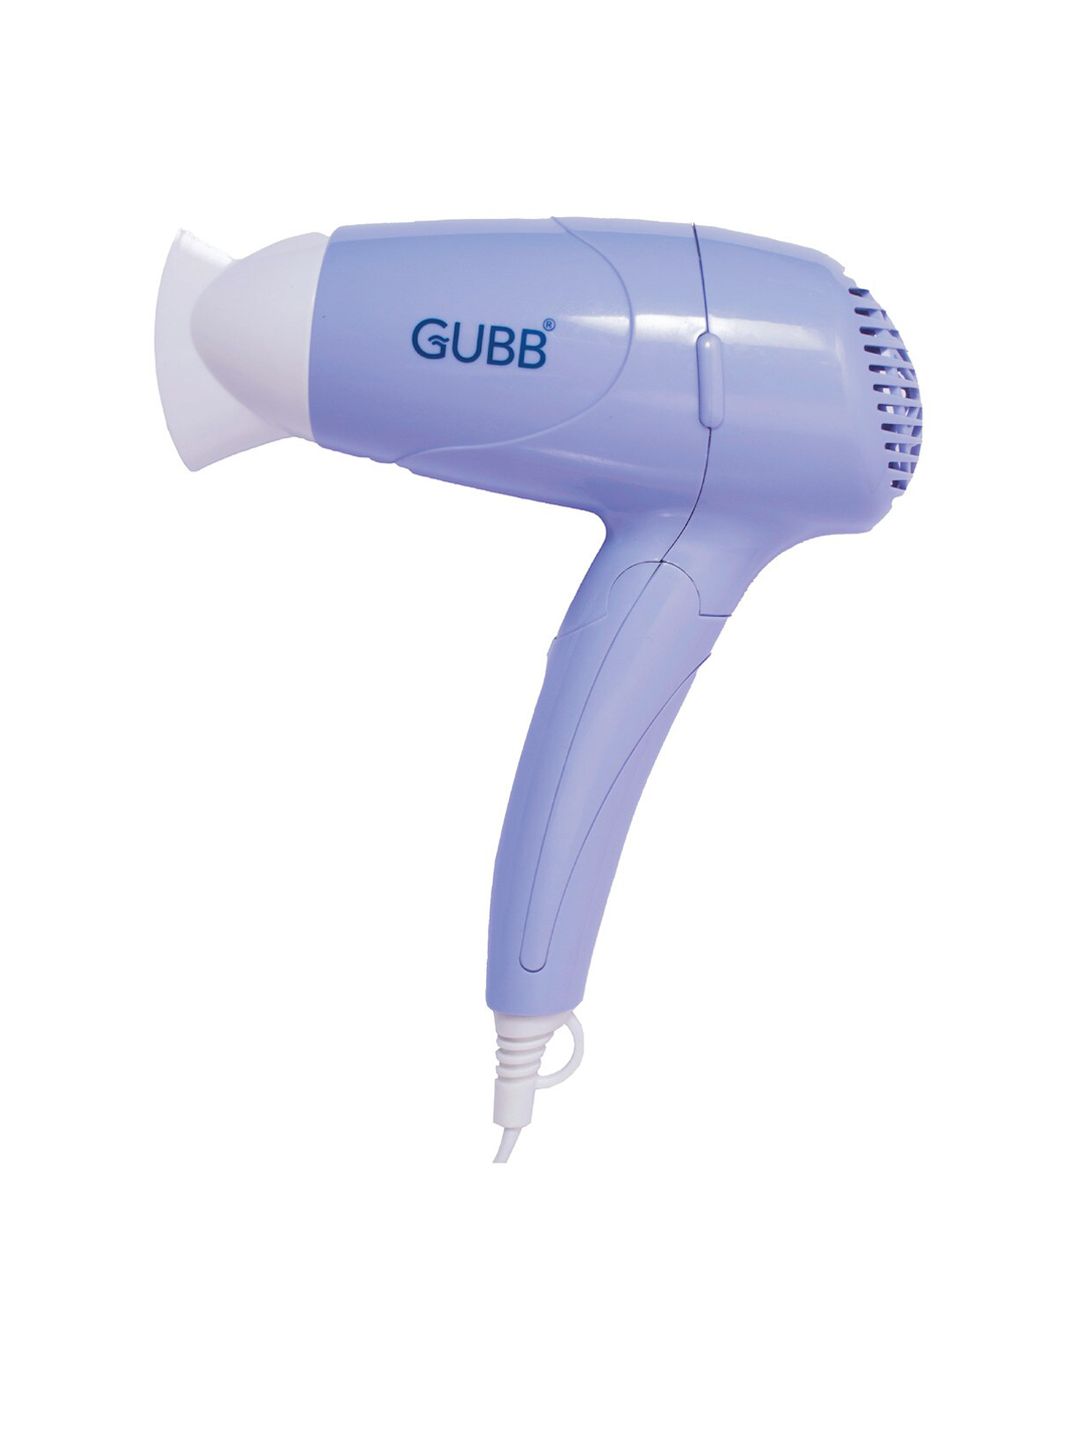 GUBB GB-128 1000W Purple Hair Dryer Price in India